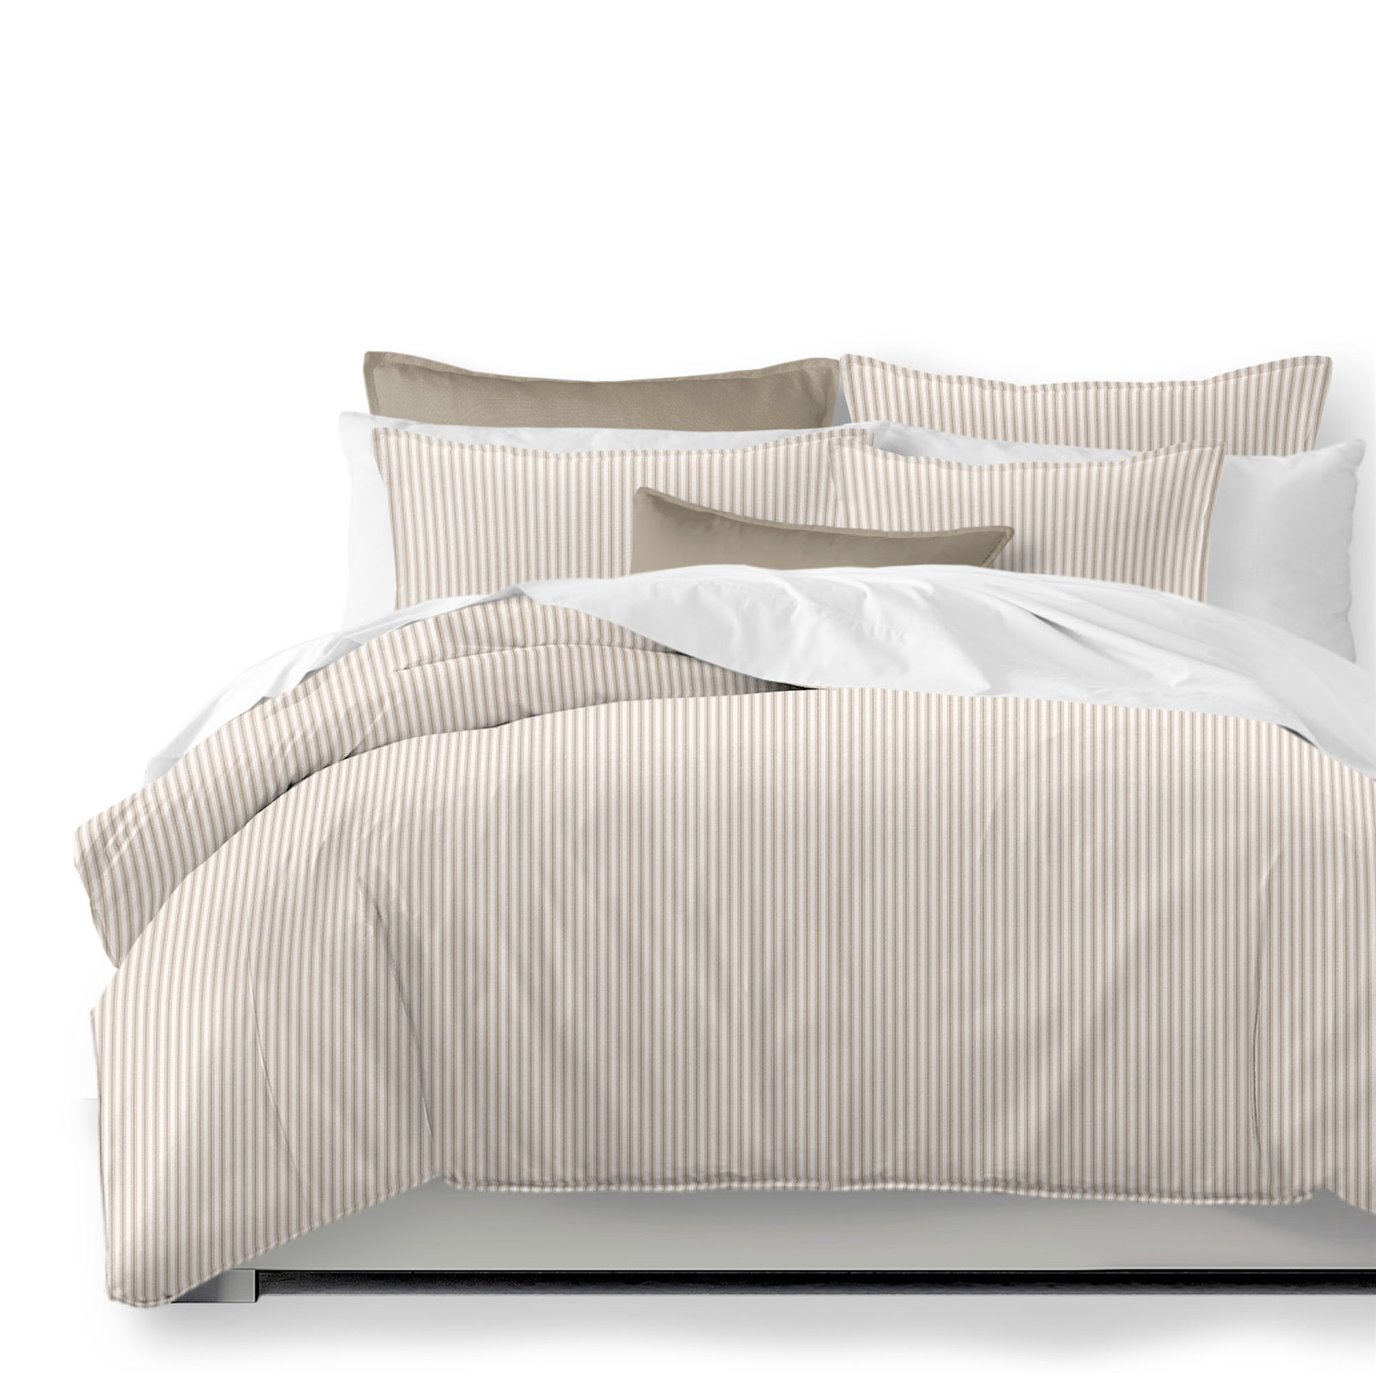 Cruz Ticking Stripes Taupe/Ivory Comforter and Pillow Sham(s) Set - Size Full